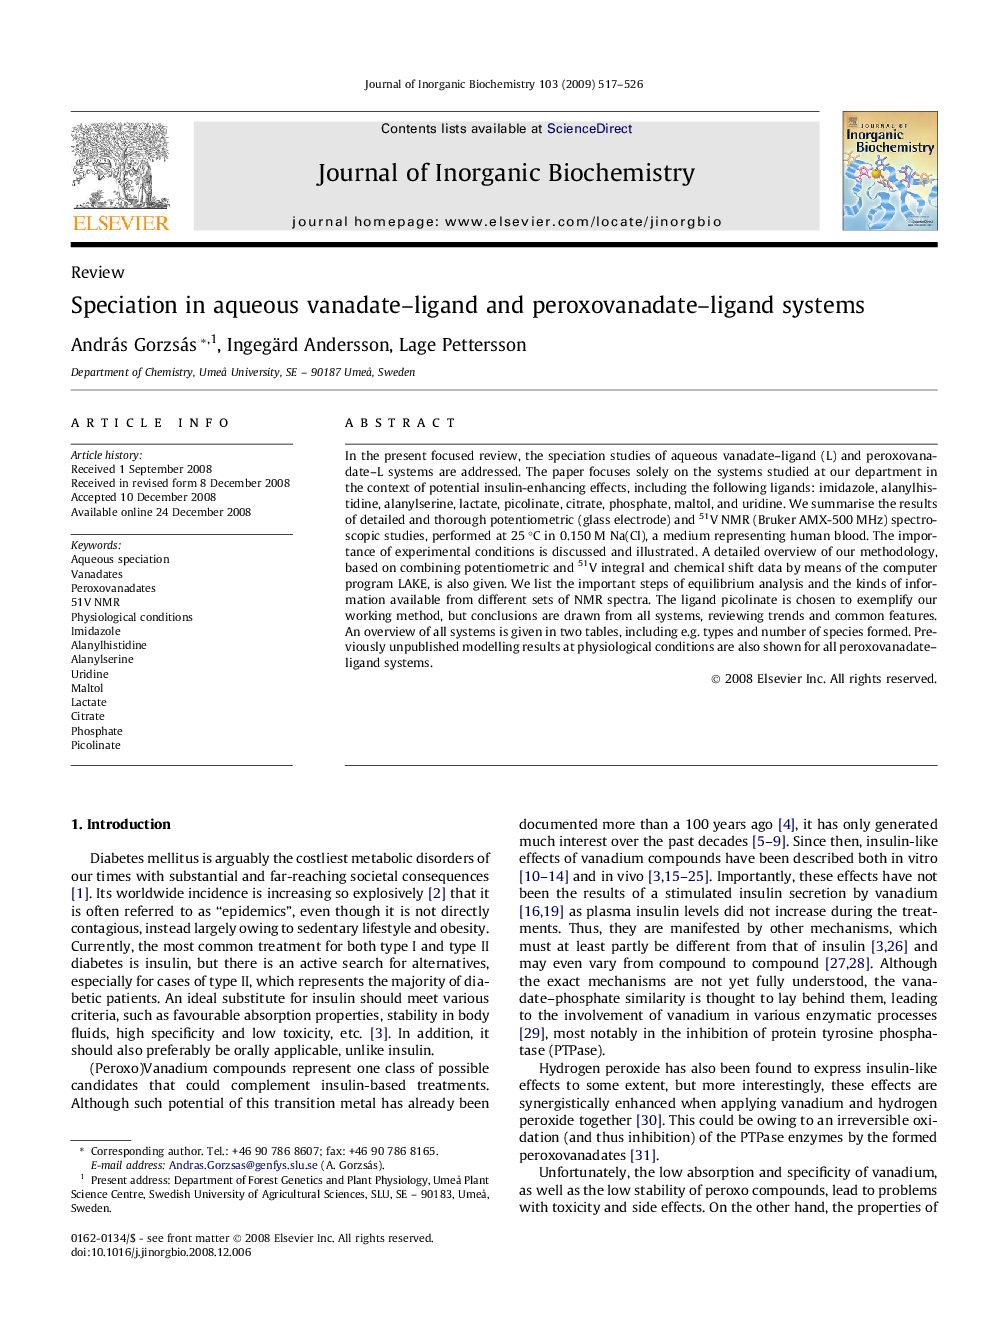 Speciation in aqueous vanadate–ligand and peroxovanadate–ligand systems